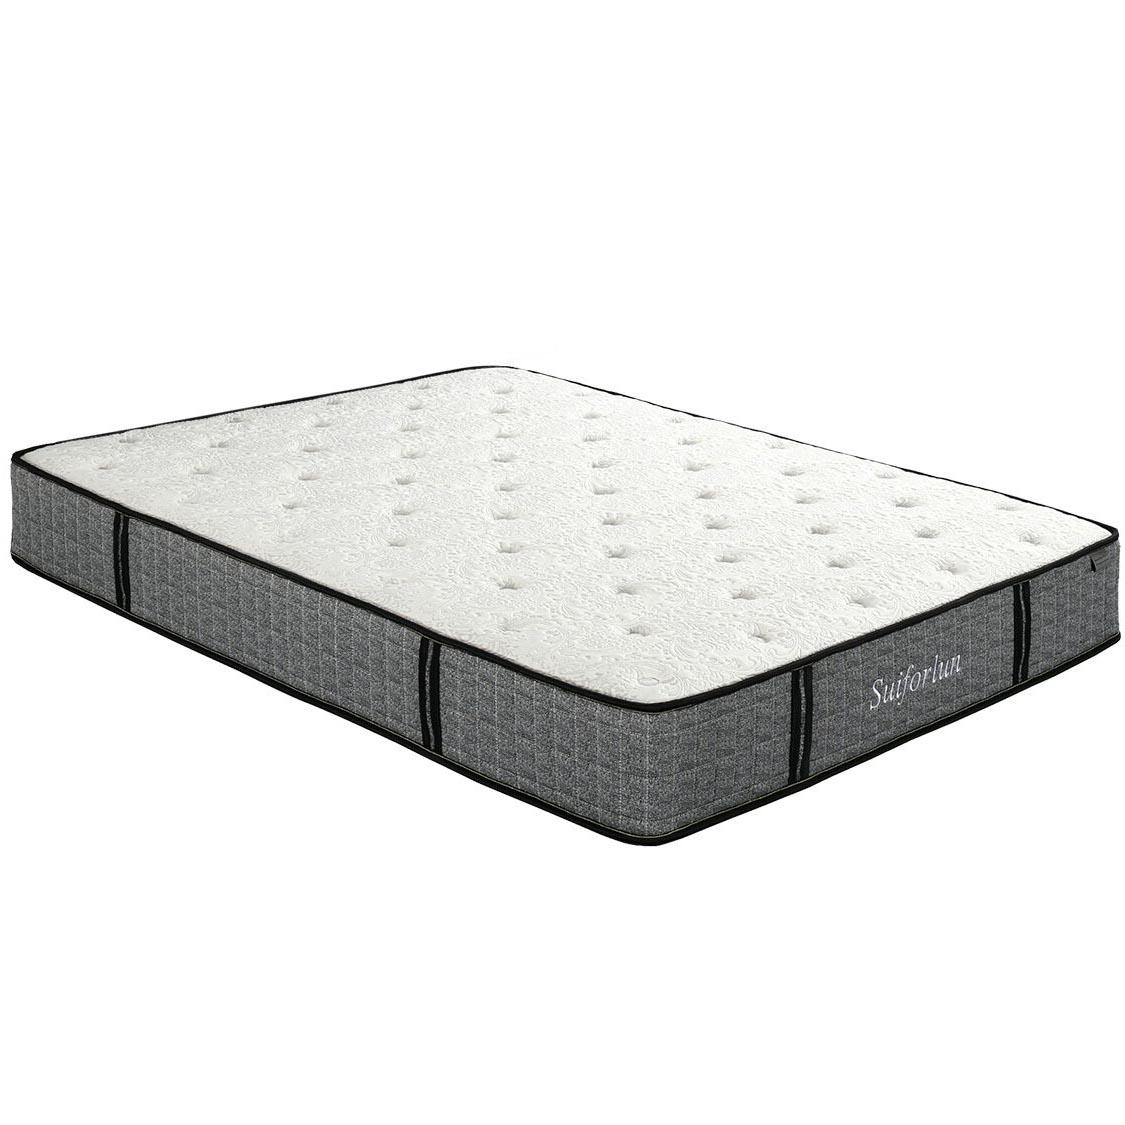 Suiforlun mattress 10 inch queen hybrid mattress series for home-2